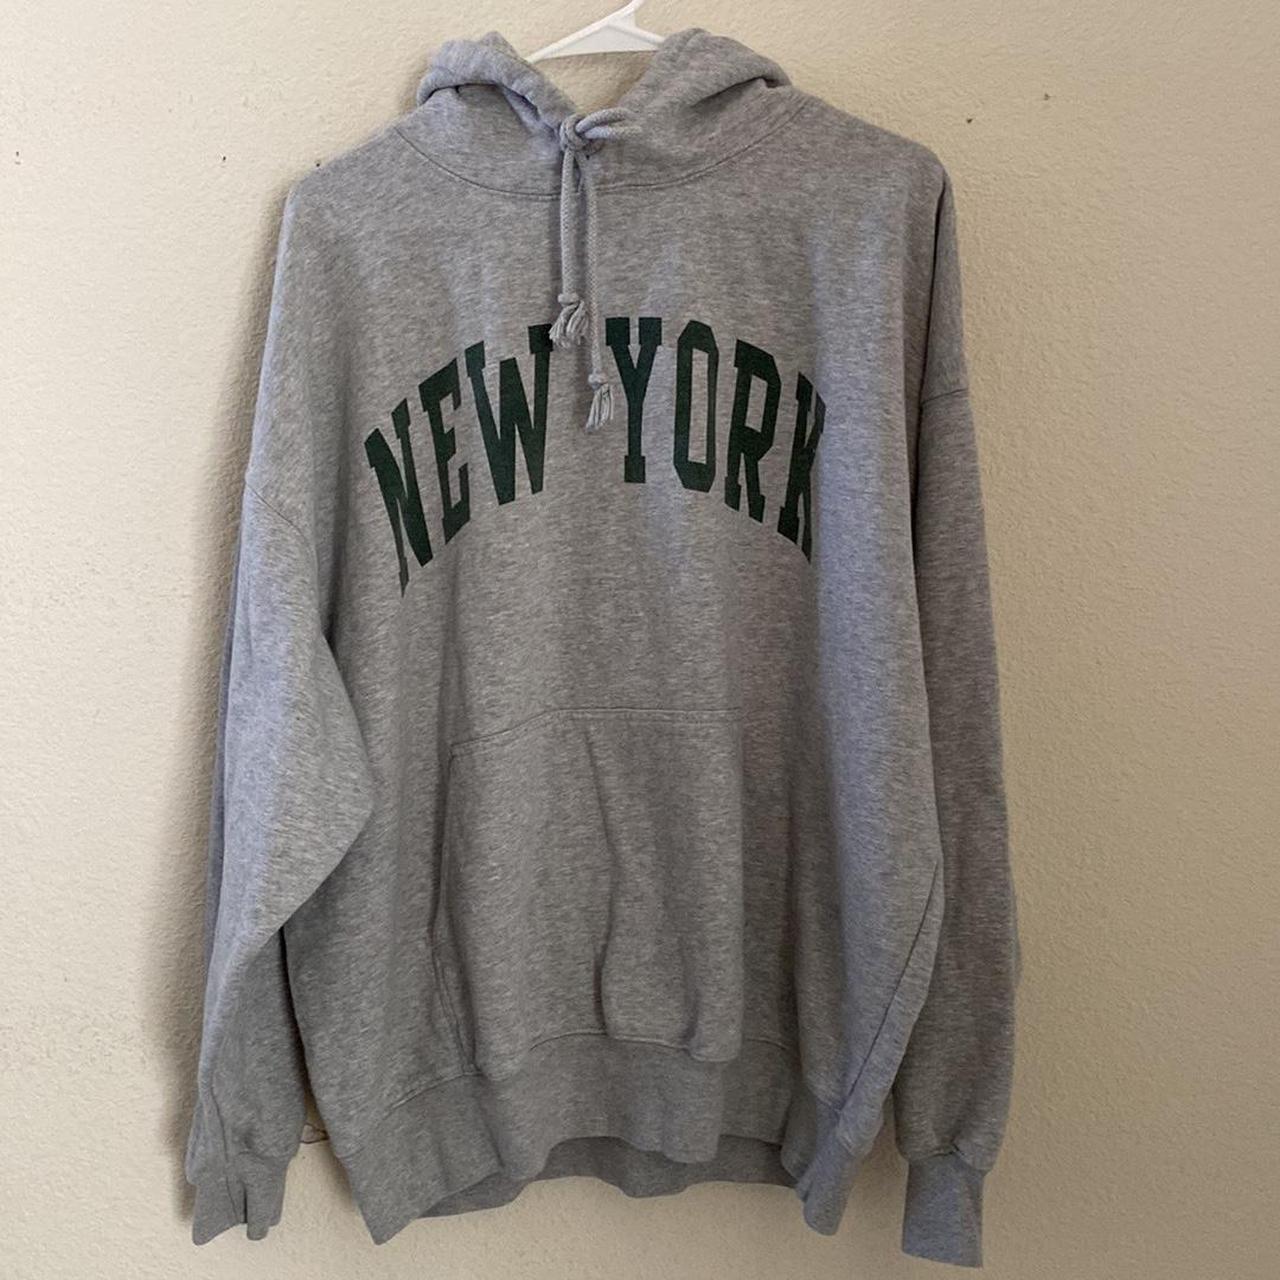 Brandy melville oversized Christy New York hoodie - Depop